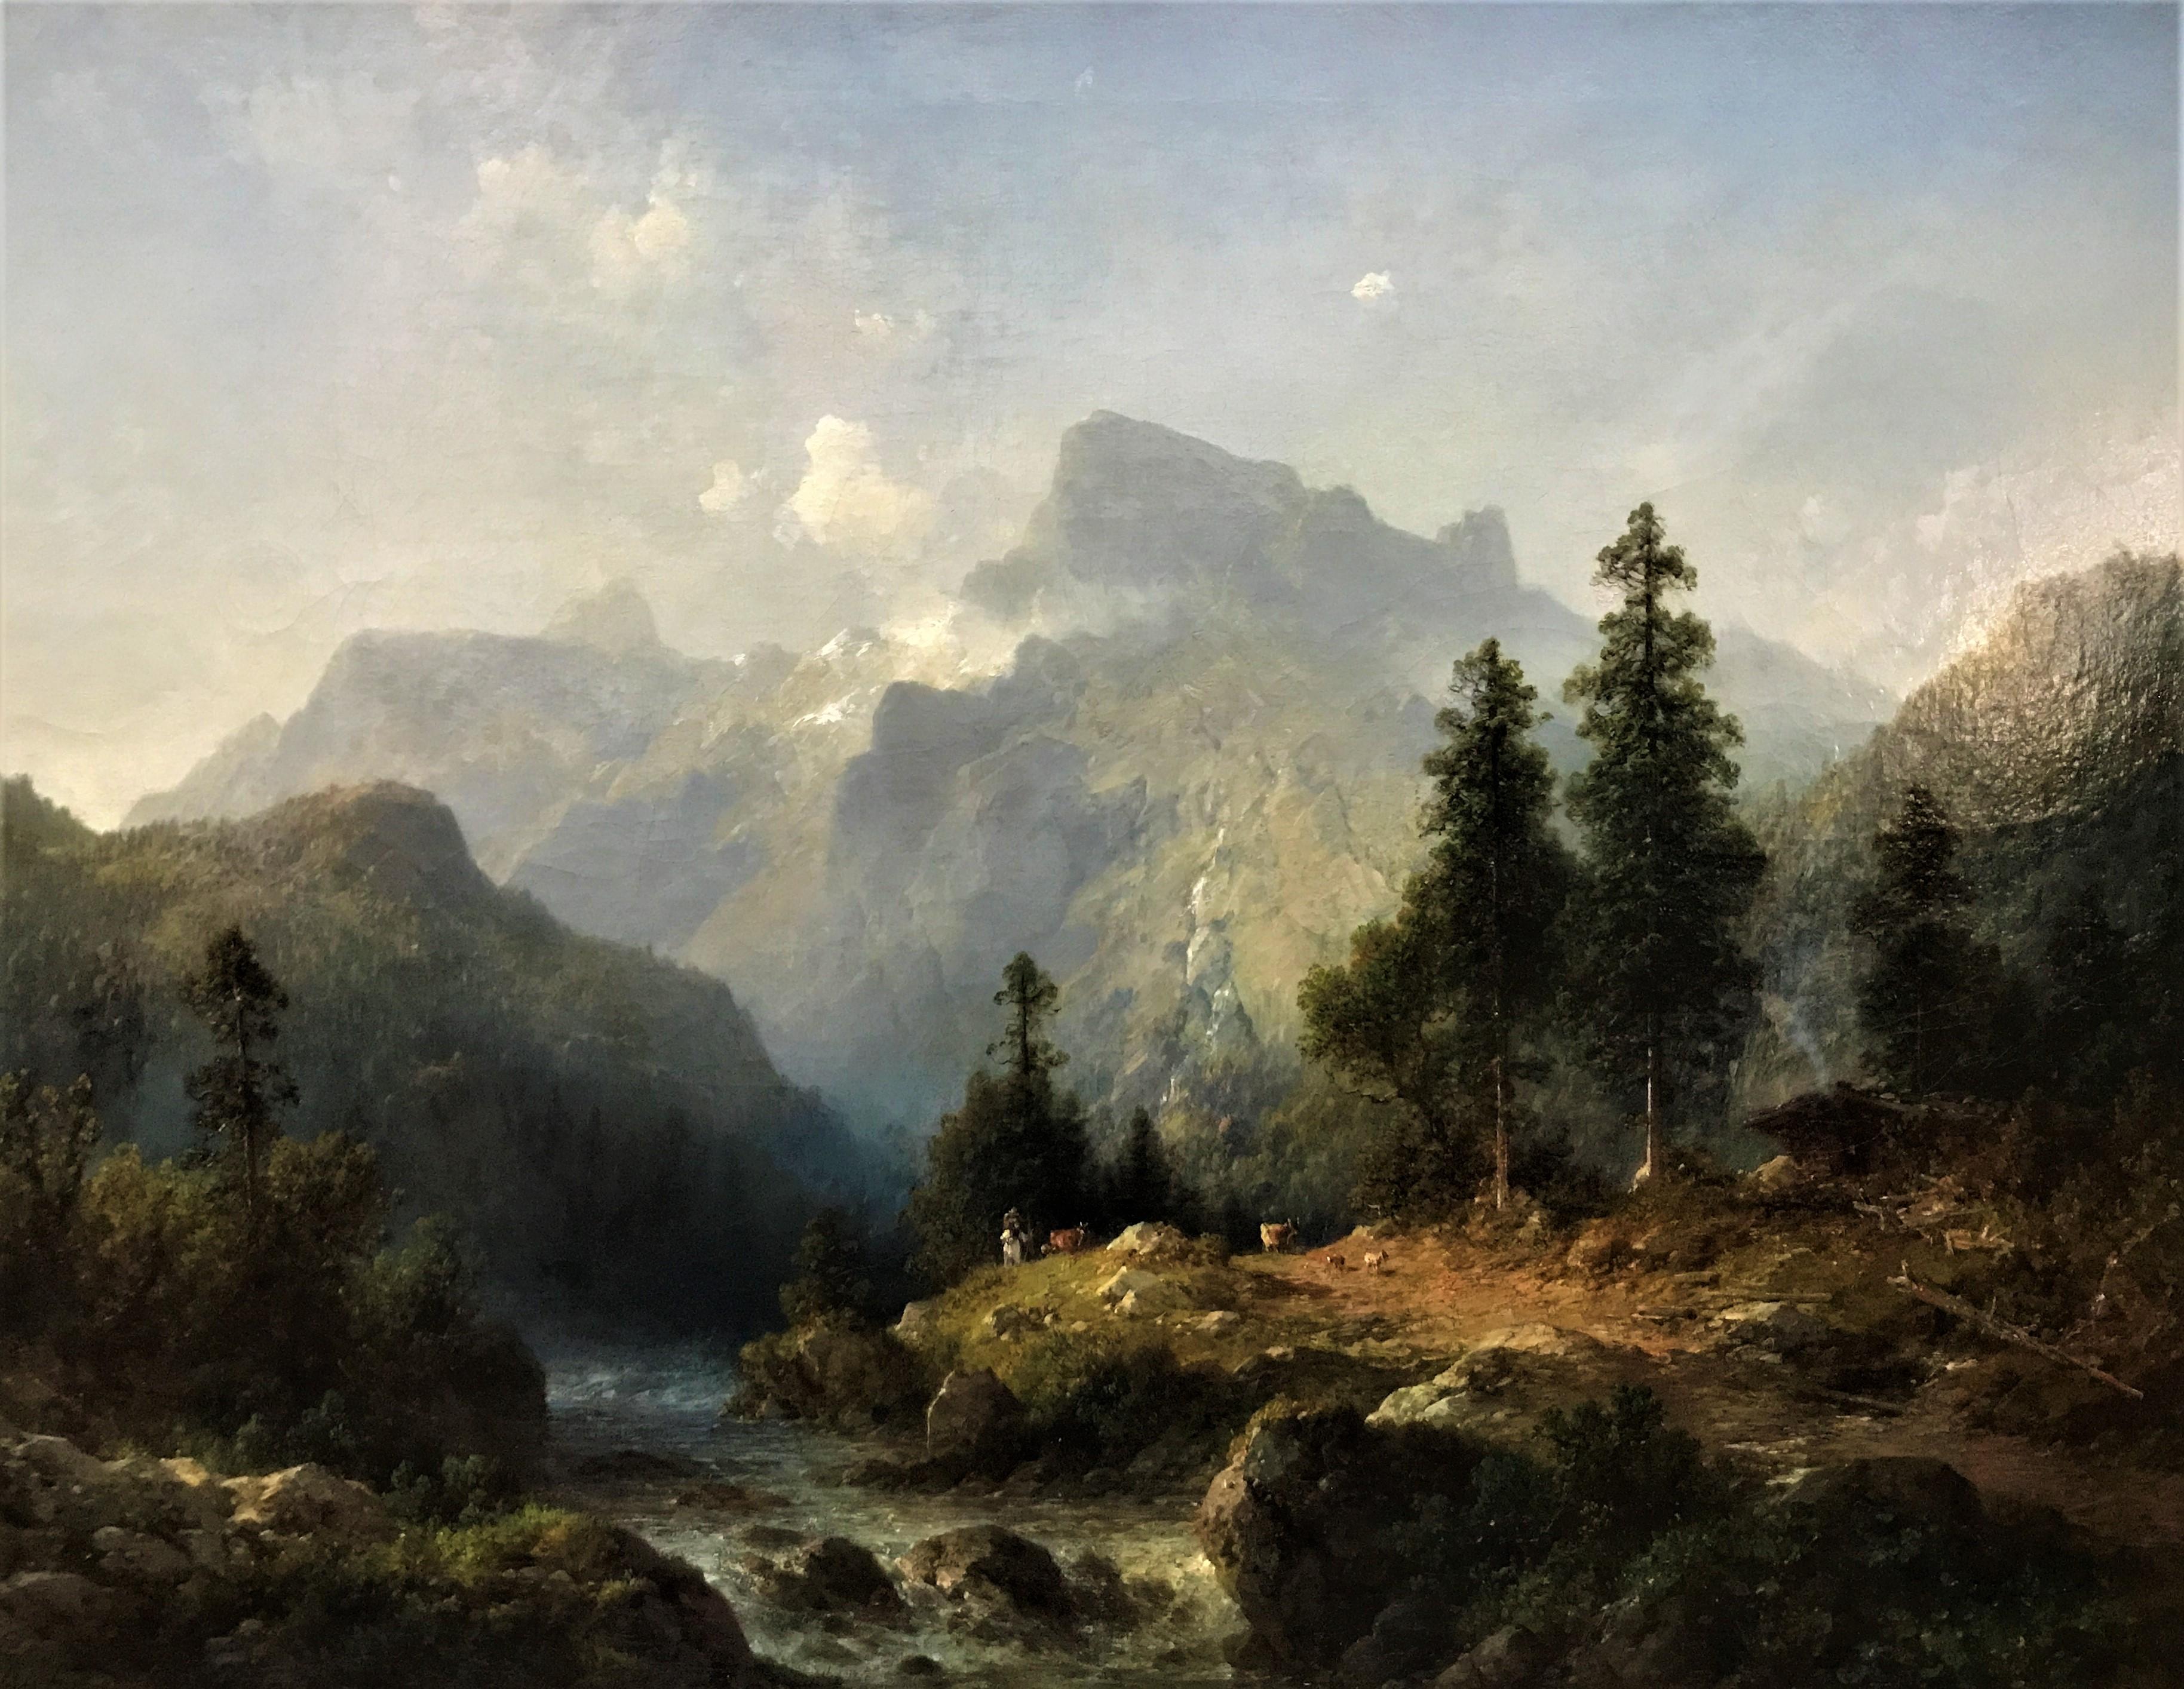 Julius Lange Animal Painting - A Mountain River Scene, original oil on canvas, 19thC German artist